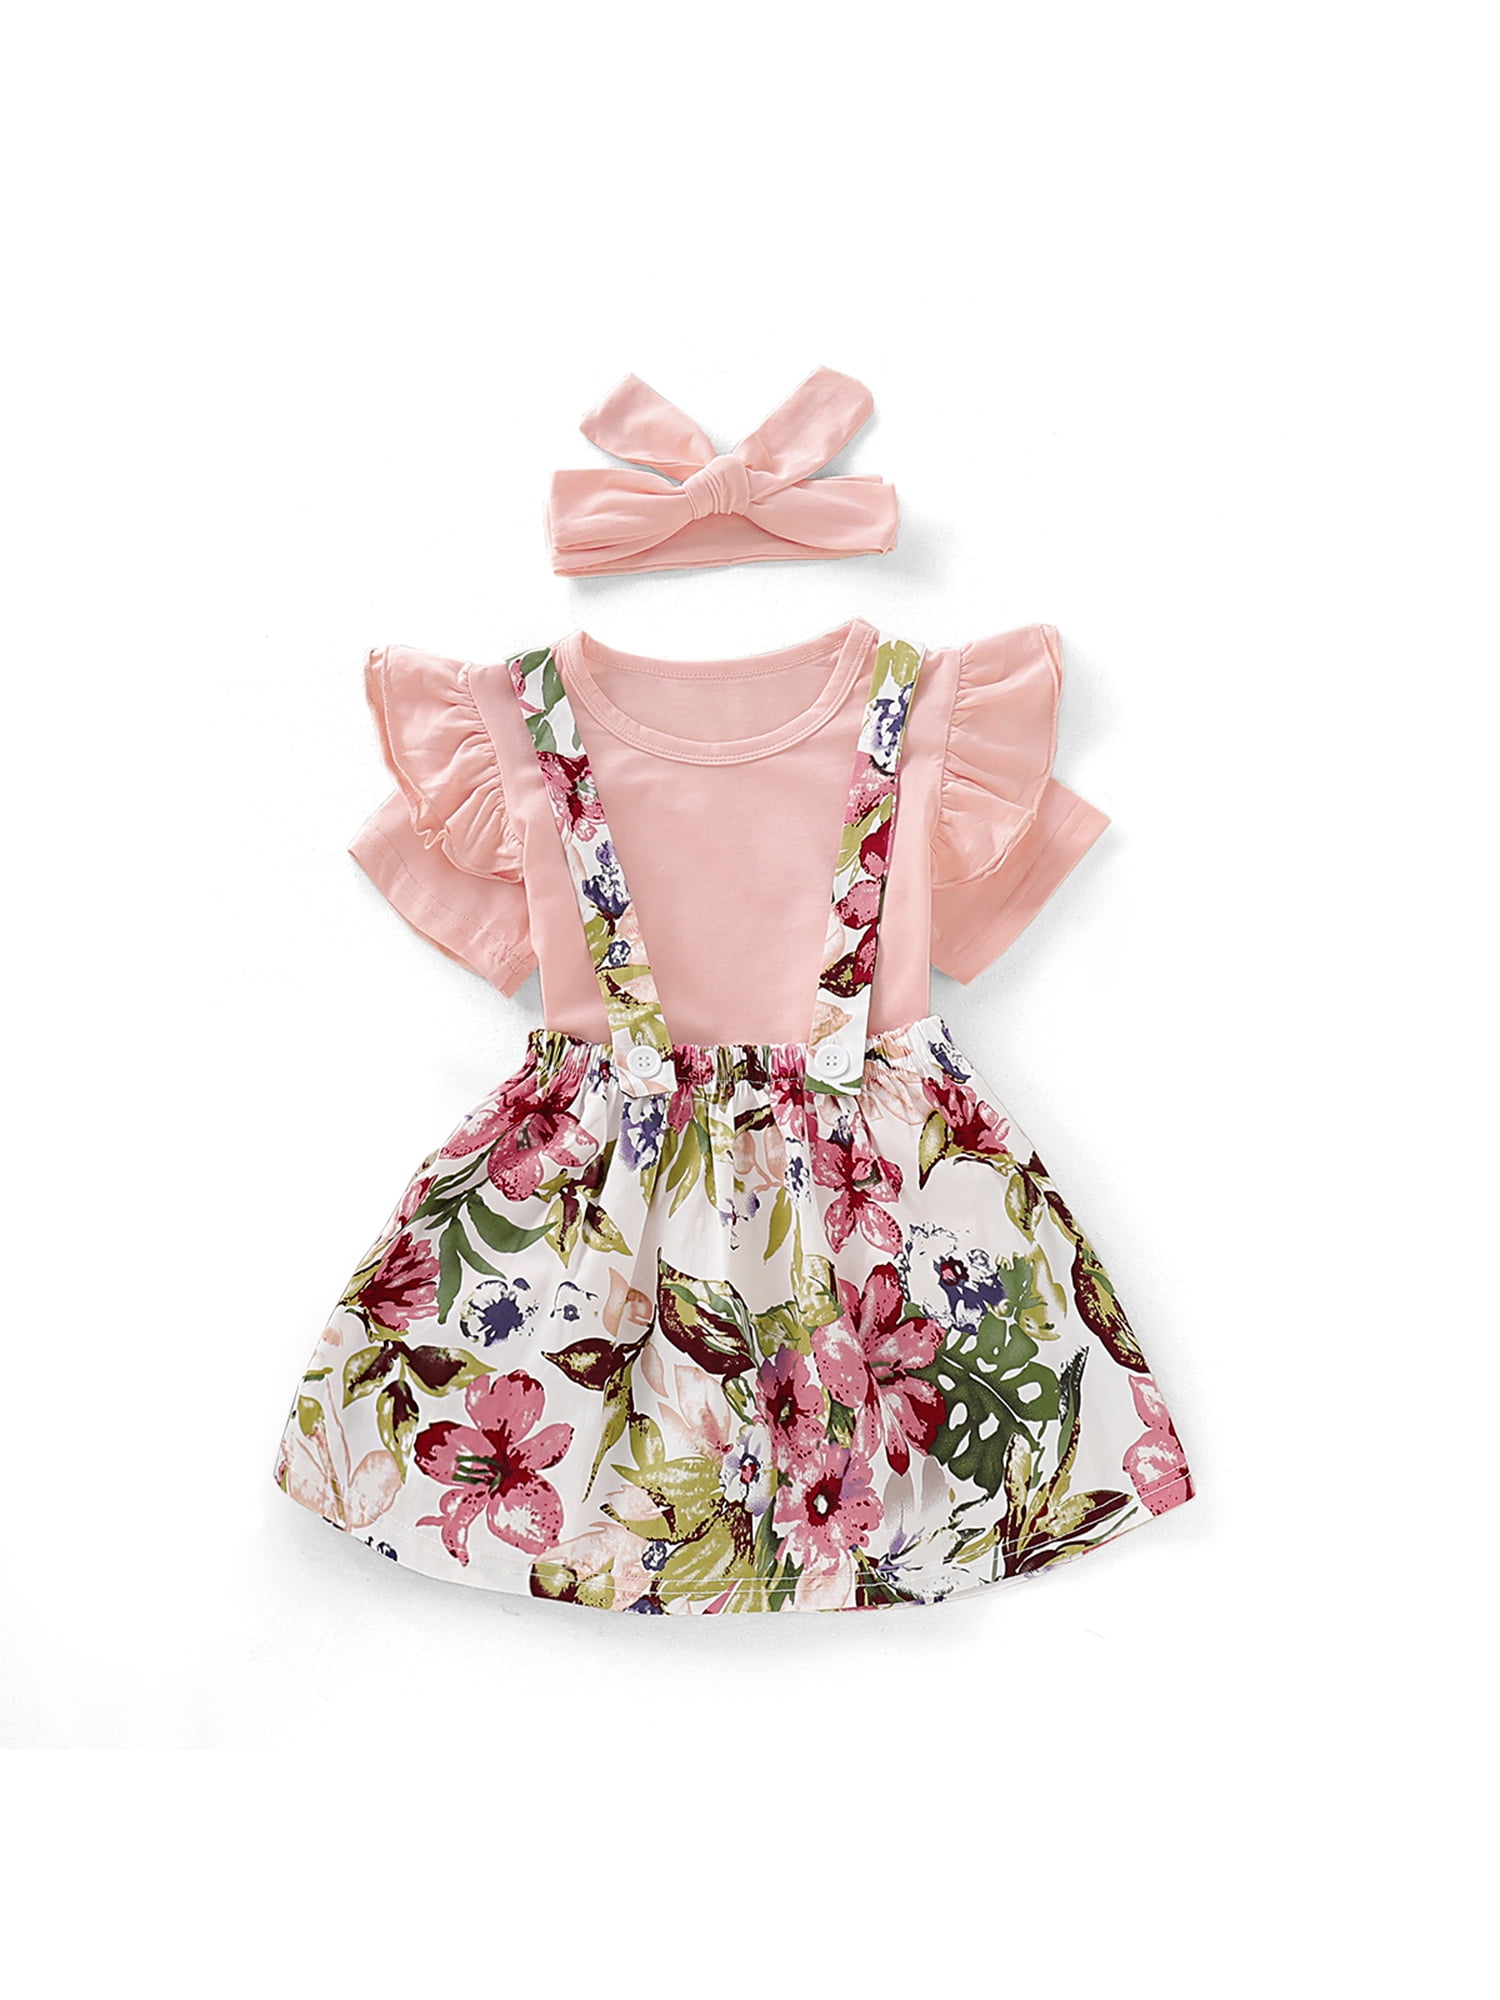 PatPat - Baby / Toddler Ruffled Floral Dress and Headband - Walmart.com